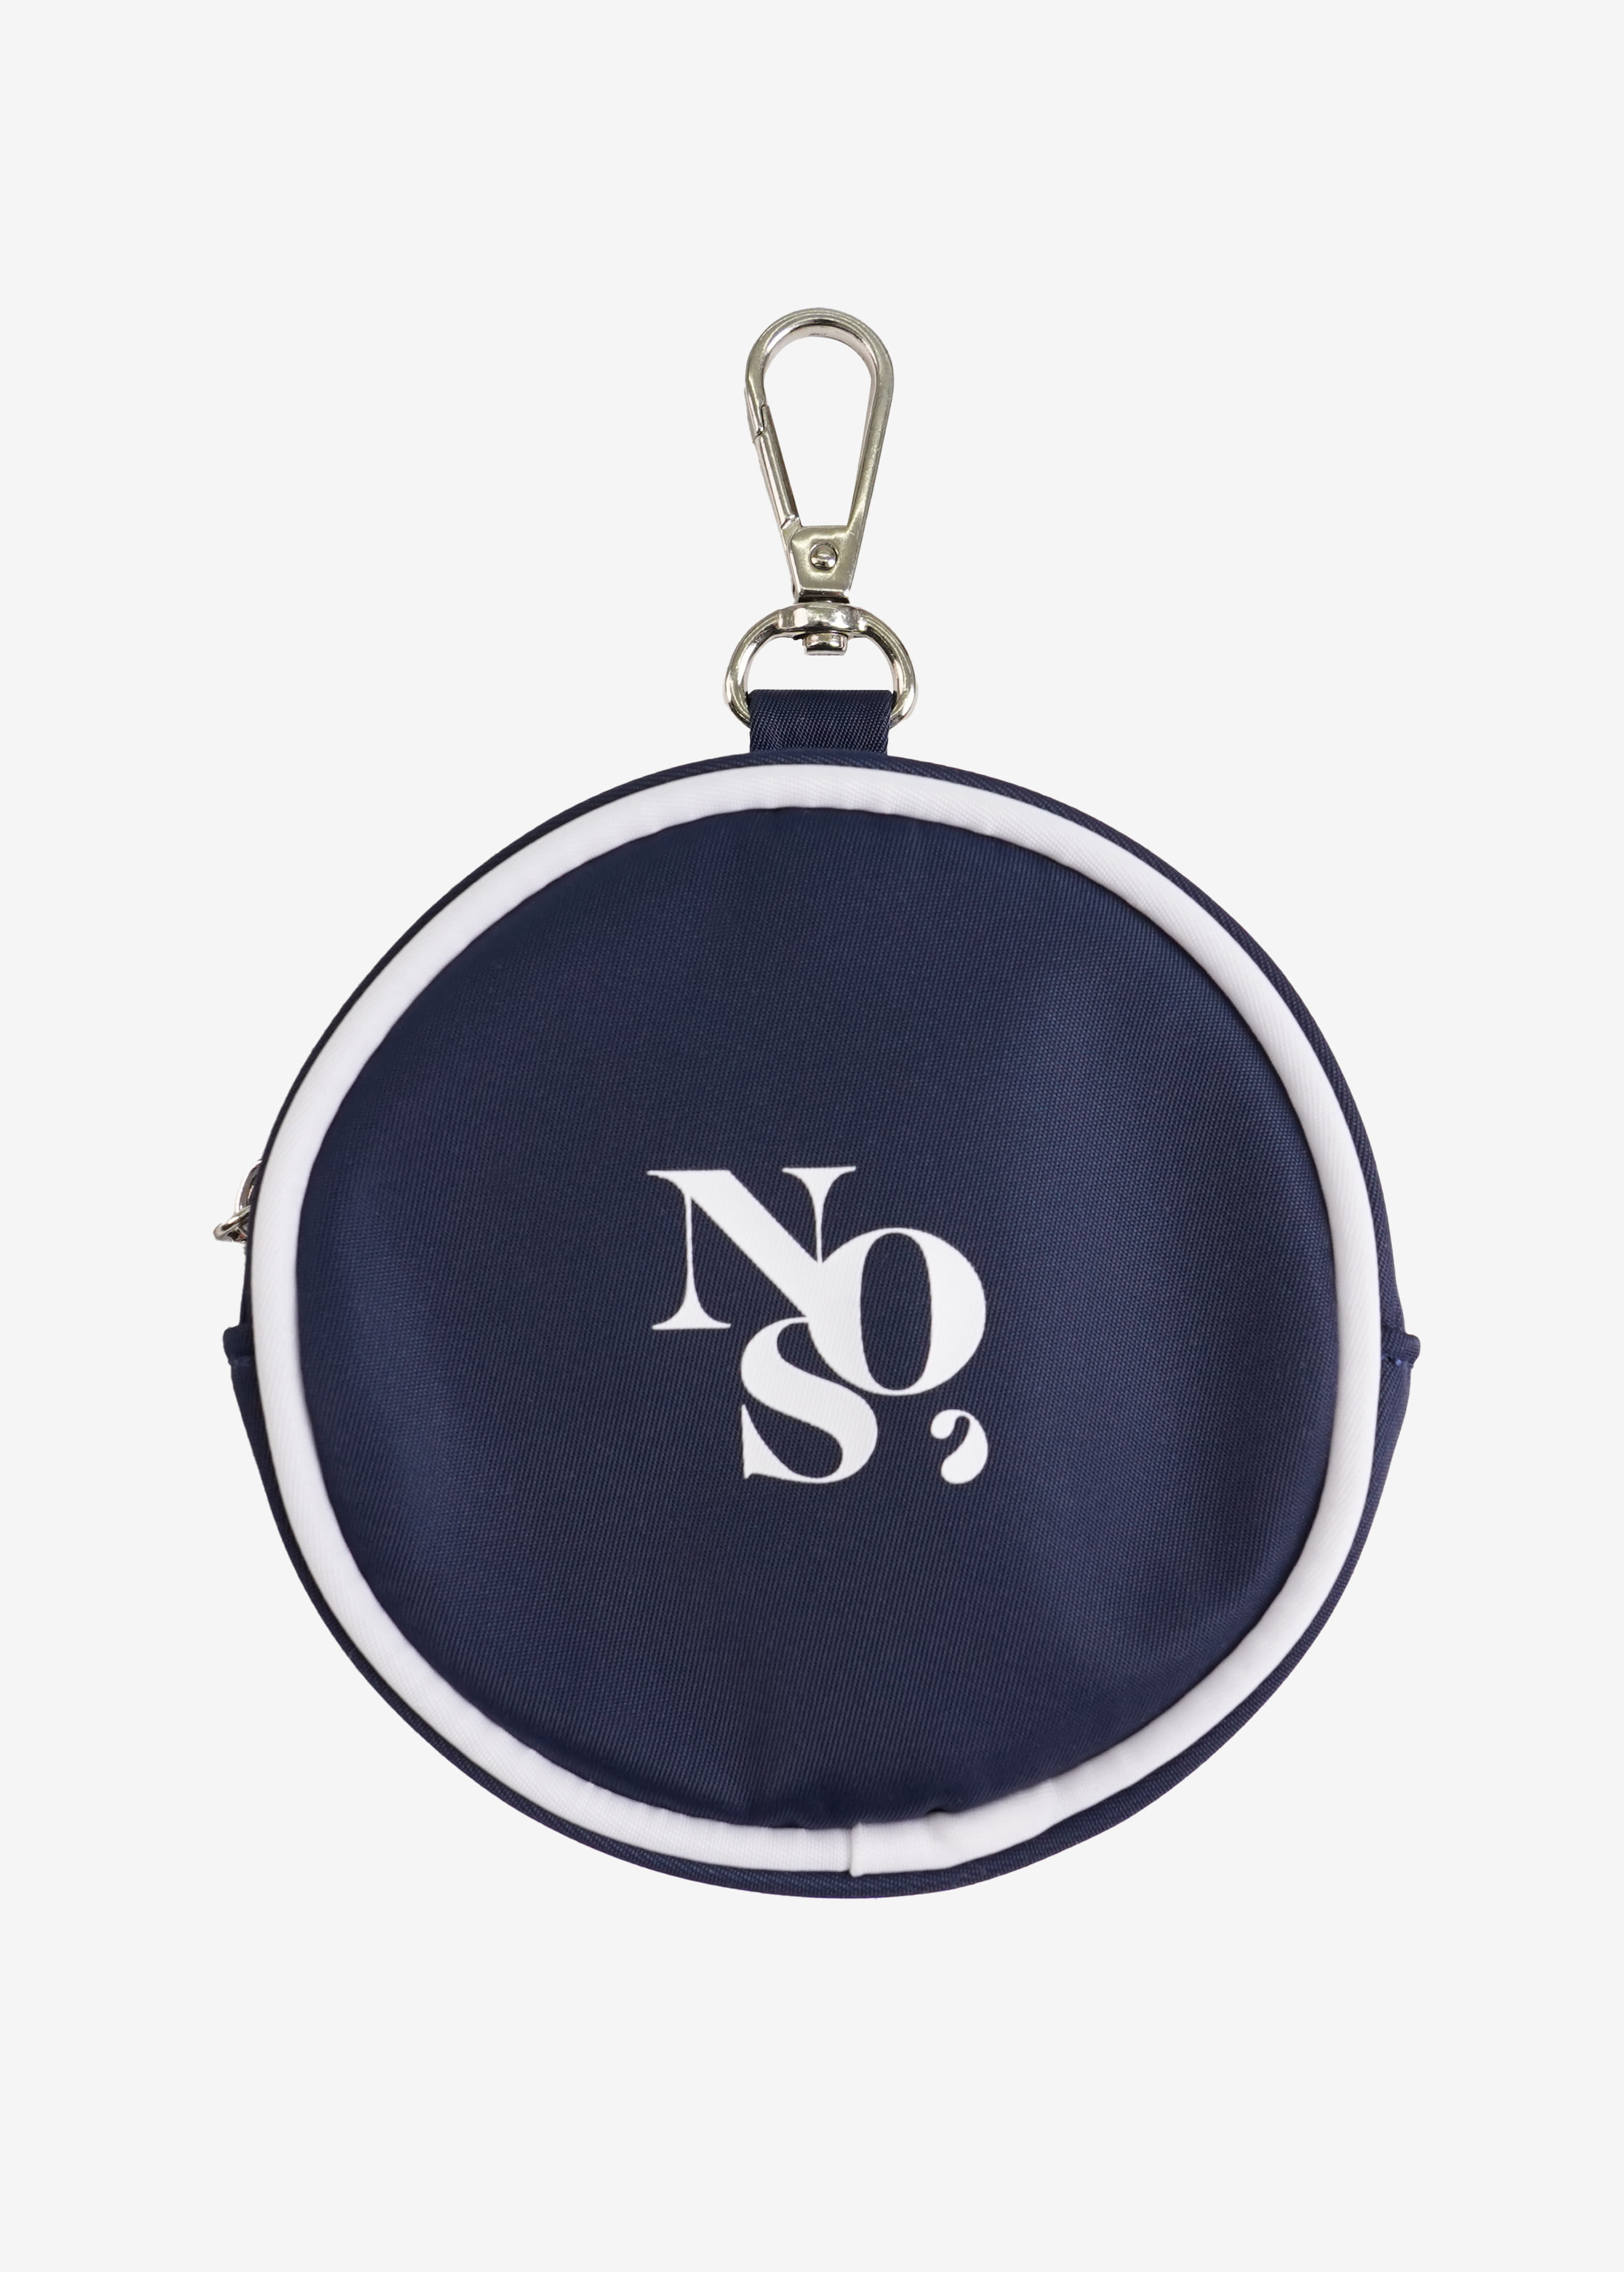 NOS7 Logo Pouch Keyring - Navy